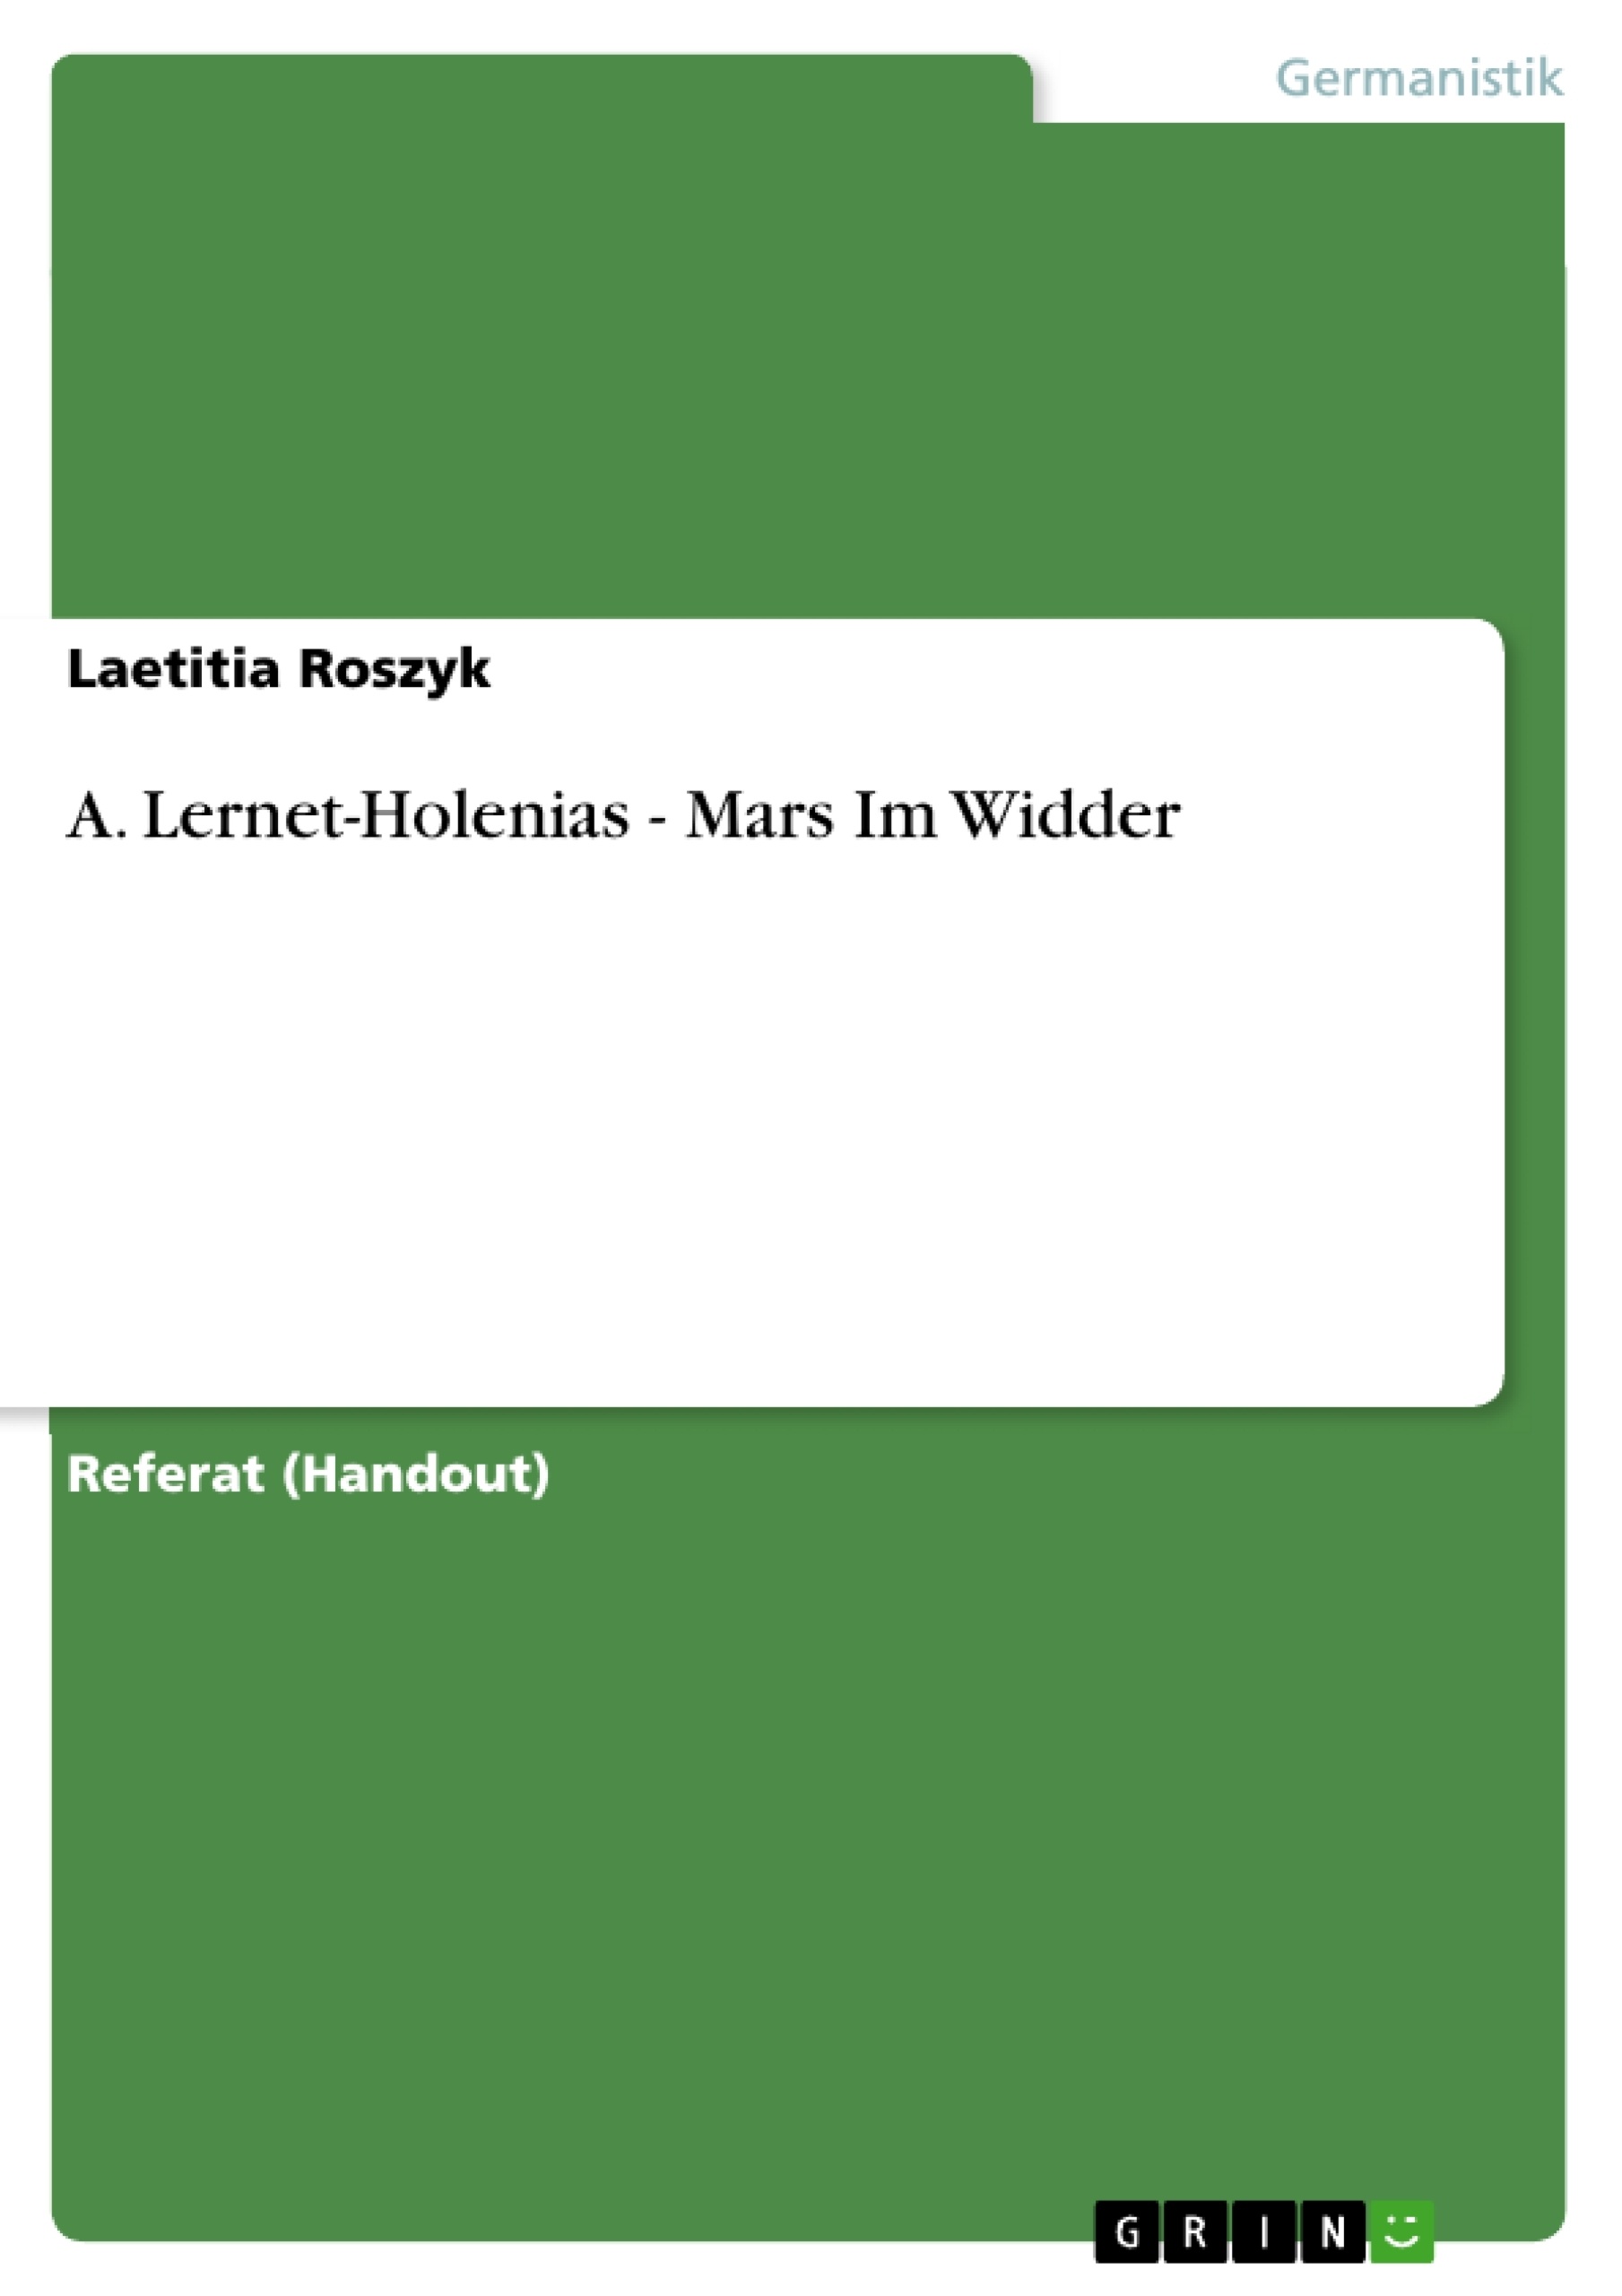 Title: A. Lernet-Holenias - Mars Im Widder